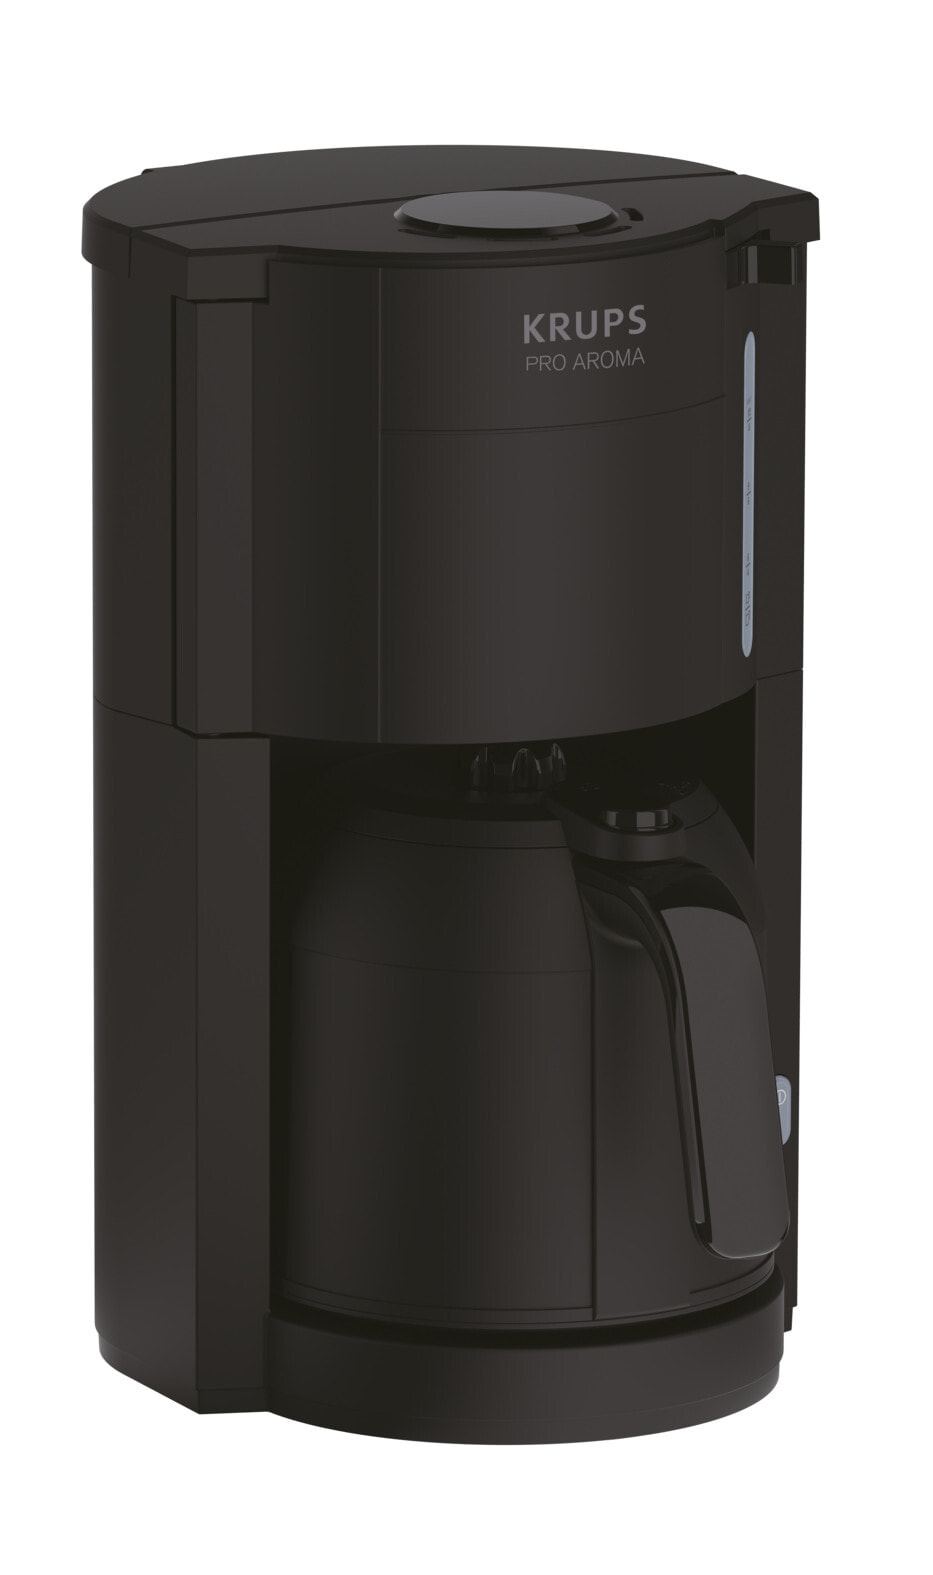 Капельная кофеварка Krups Pro Aroma KM3038